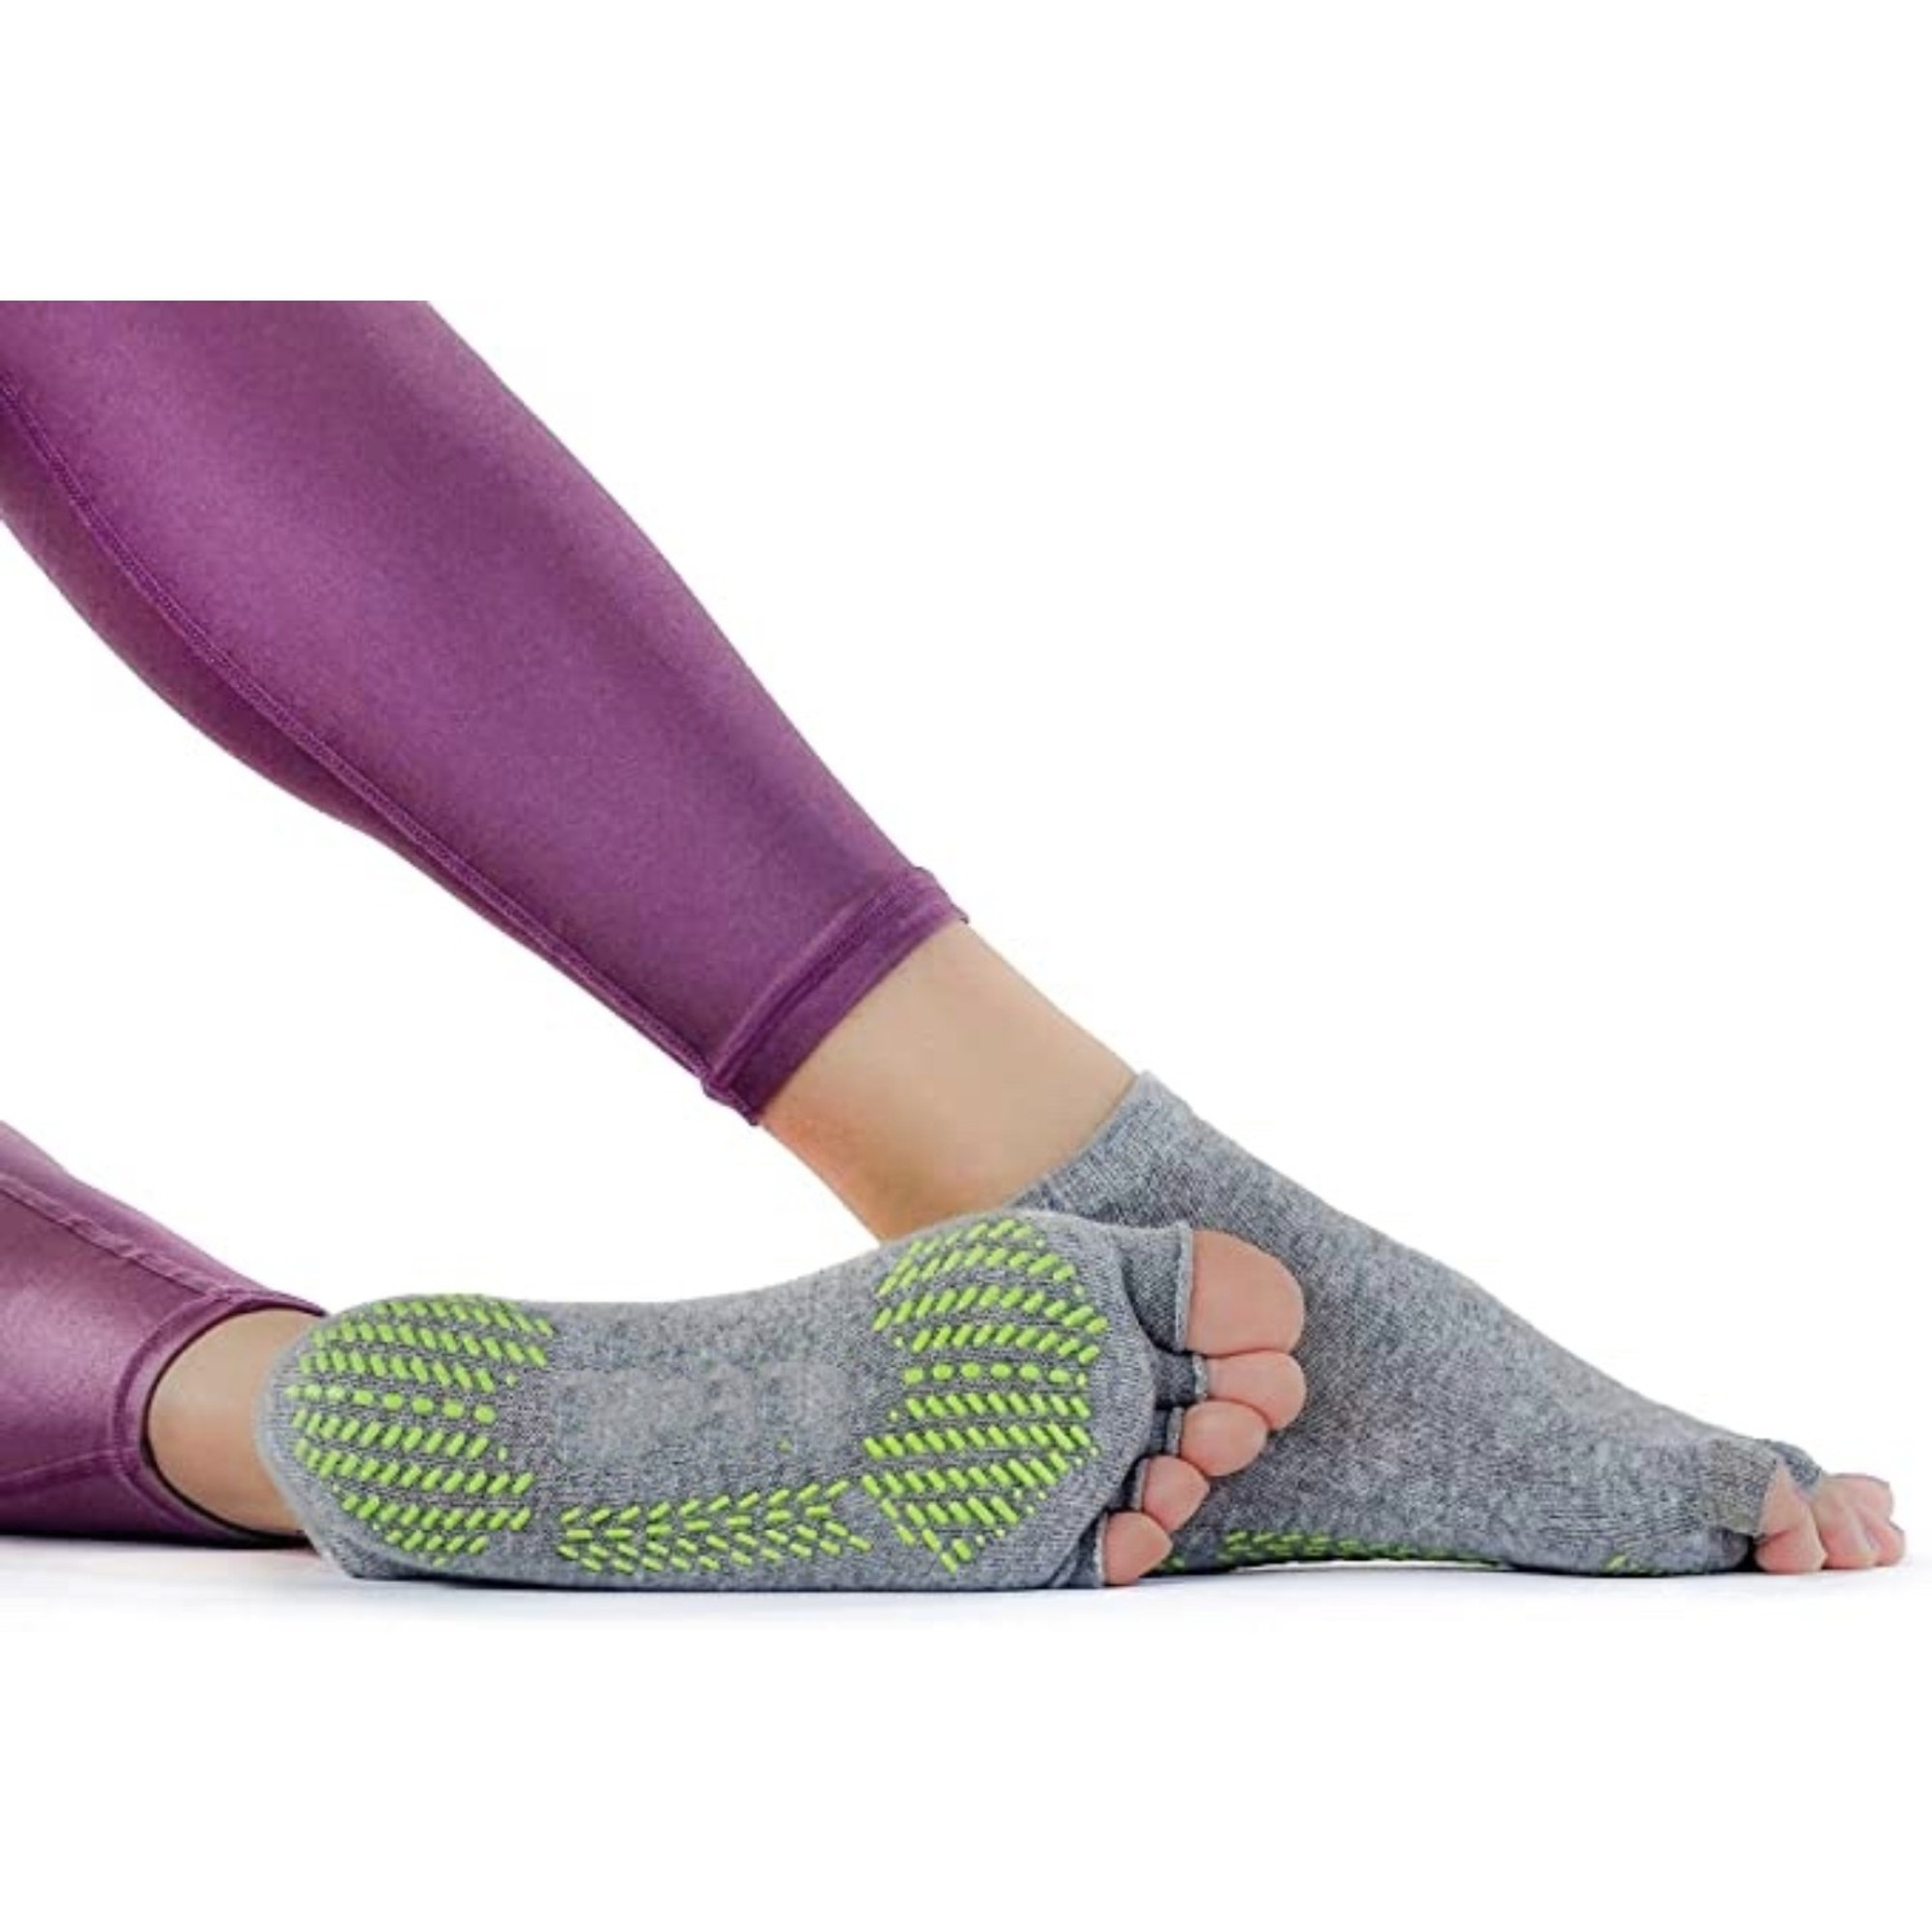 Toeless Ballet Style Yoga Pilates Barre Grip Socks With Non Slip